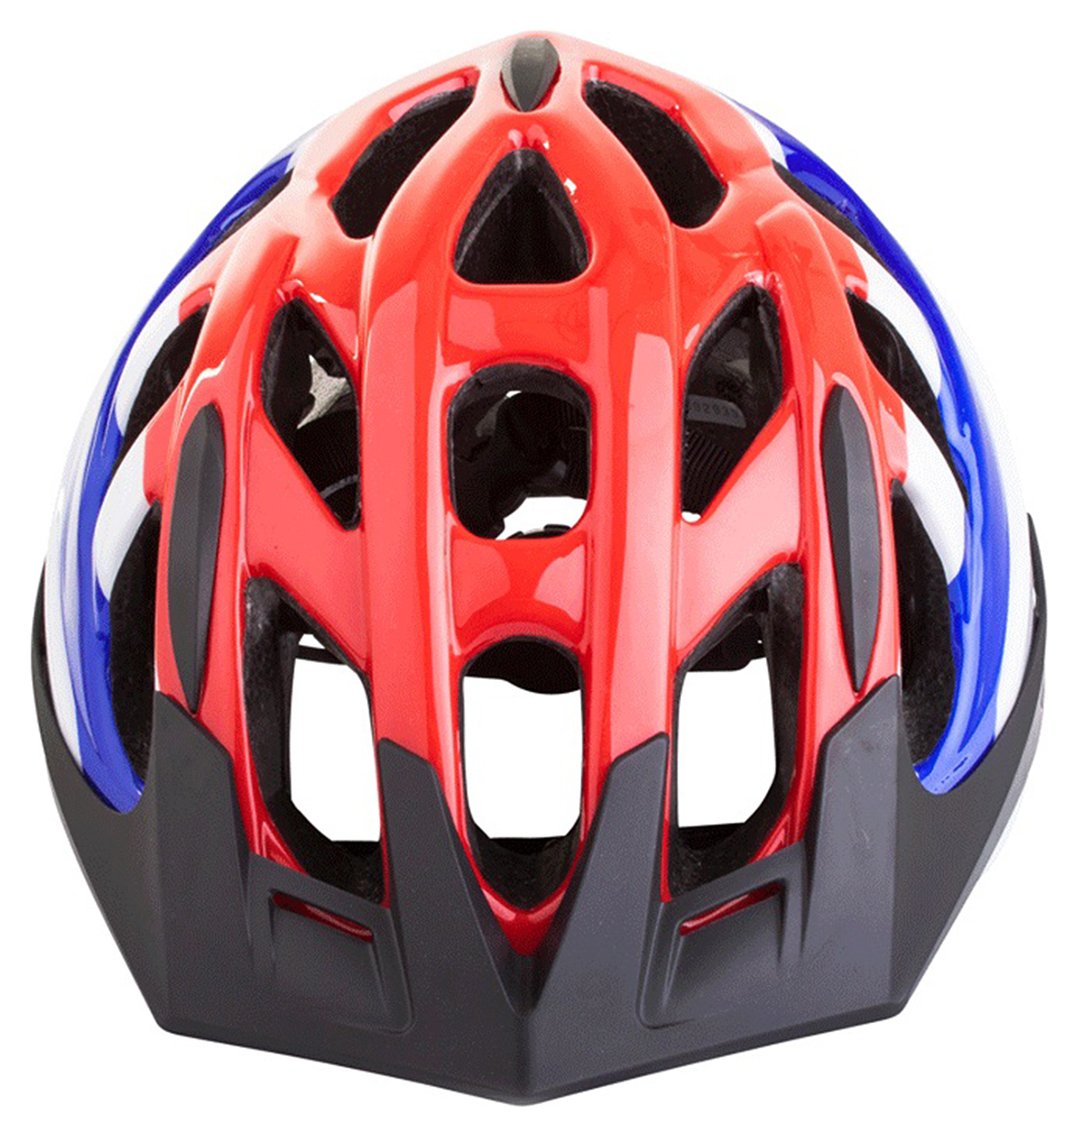 Lazer Cyclone S British 56-59cm Cycling Helmet